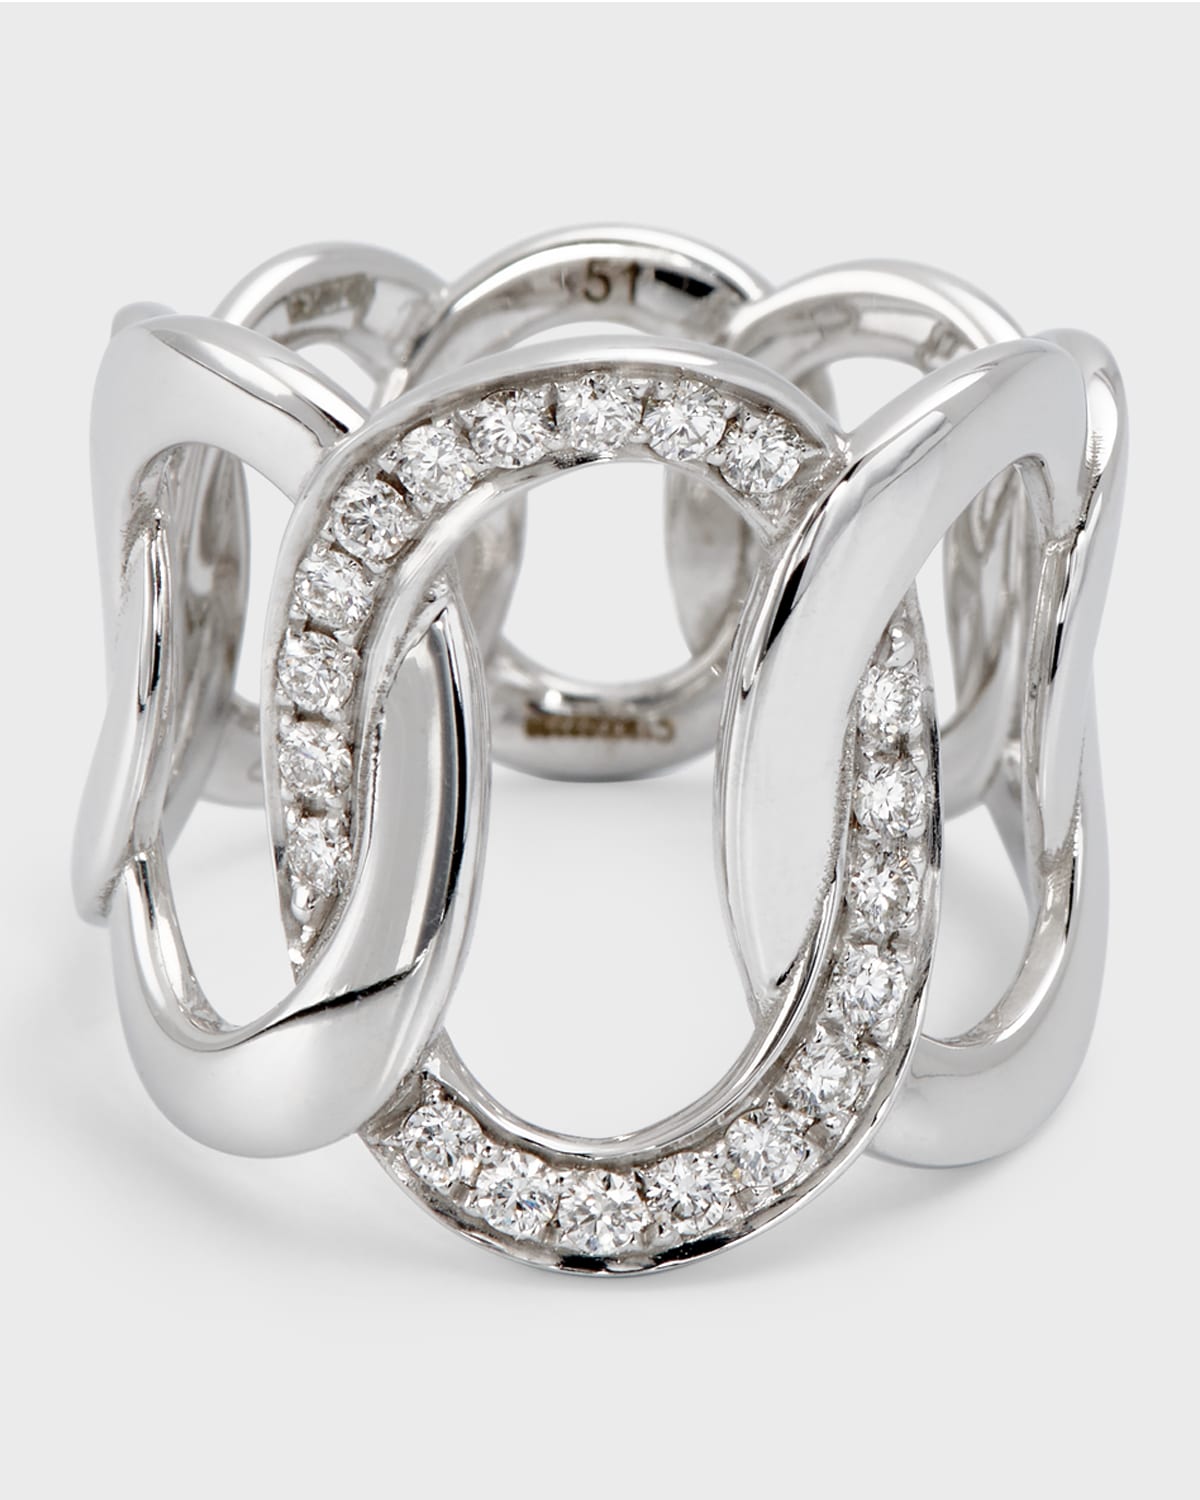 Brera 18K White Gold Ring with Diamonds - Size 51